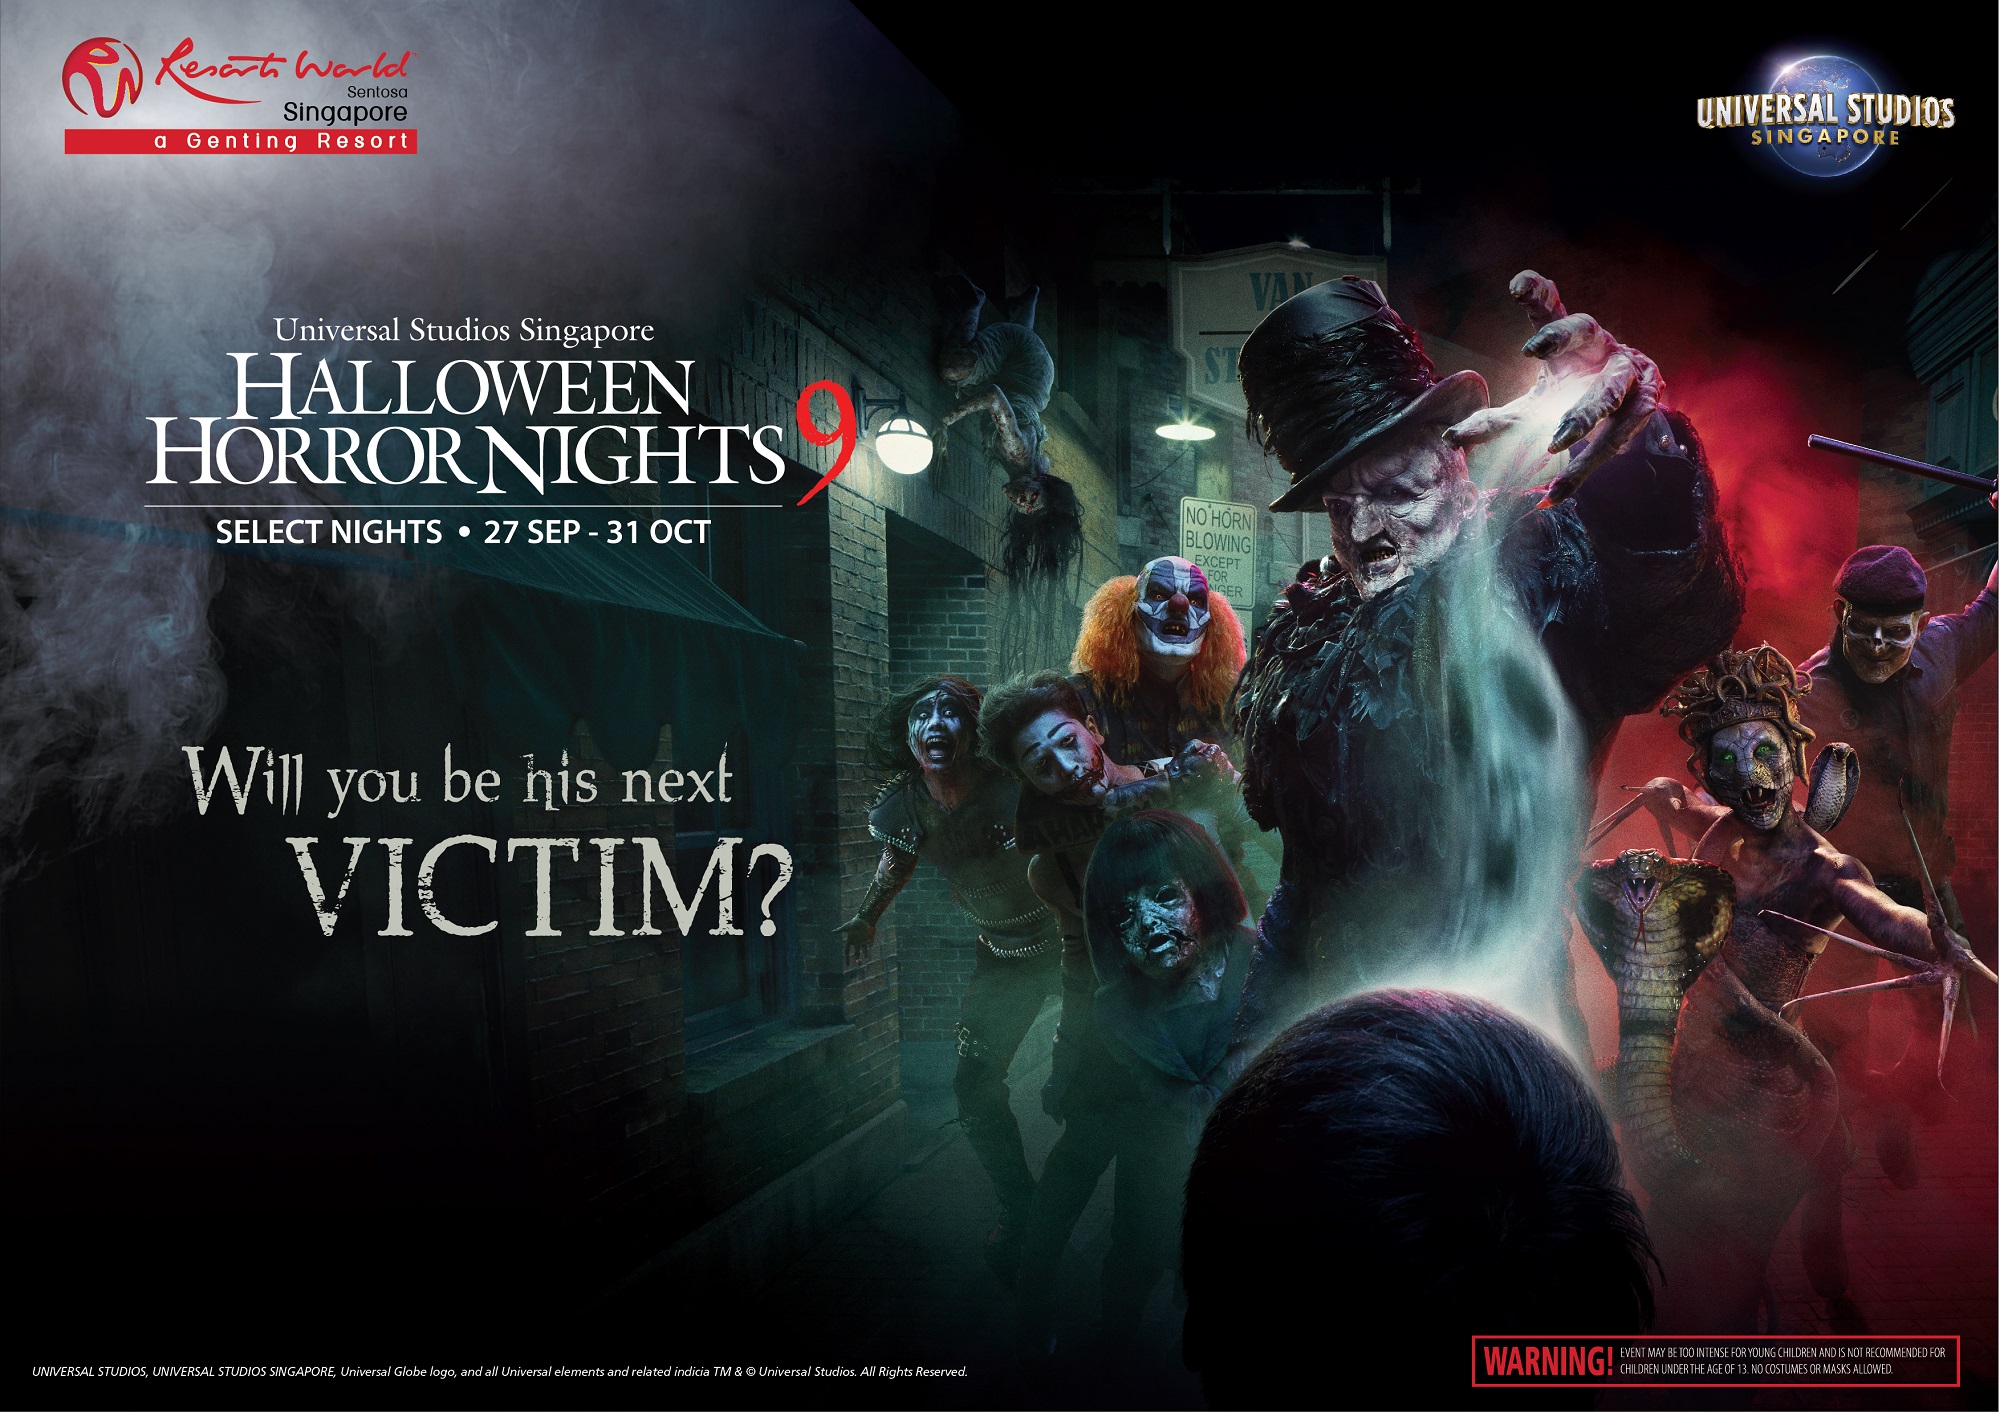 Universal Studios Singapore’s Halloween Horror Nights returns for 9th